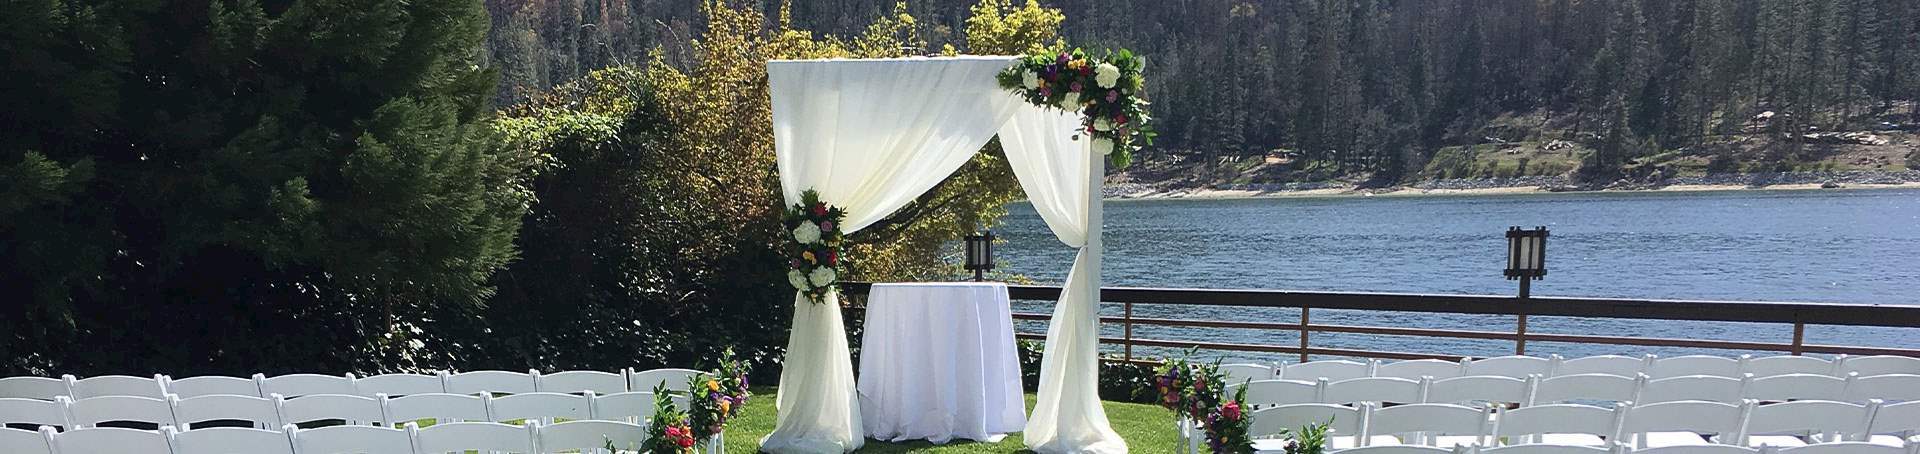 Weddings At The Pines Resort Bass Lake California